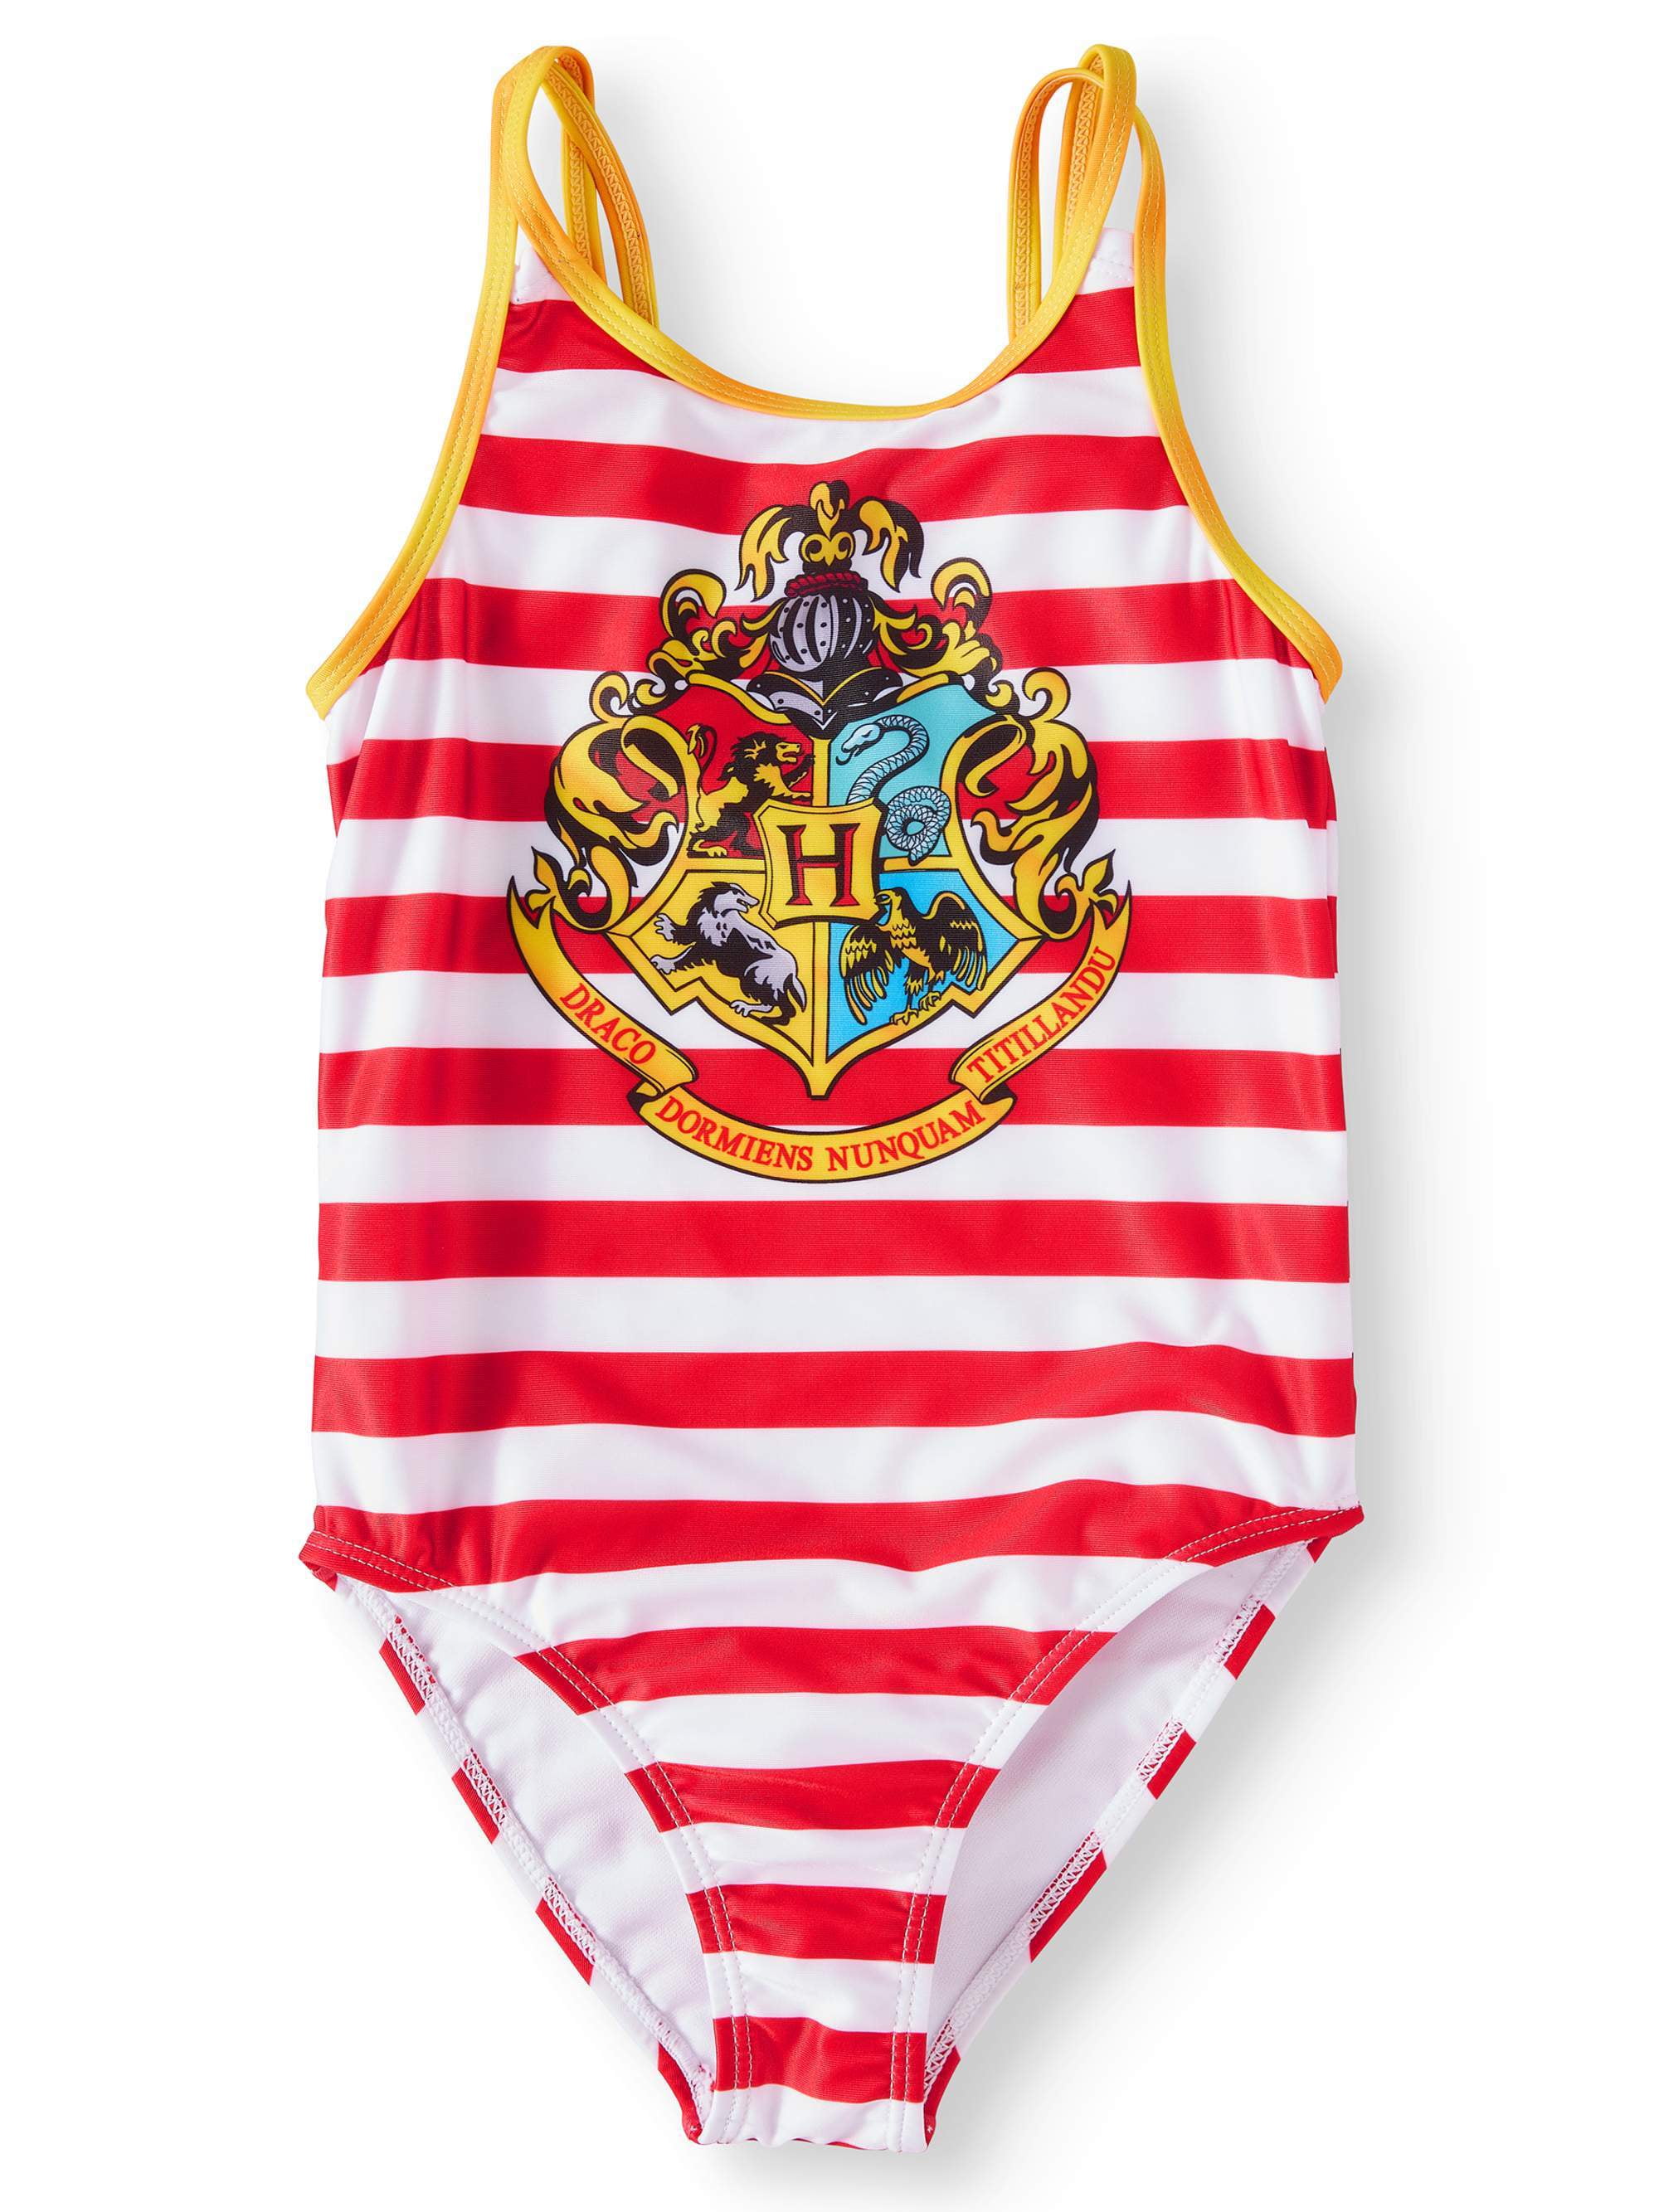 Harry Potter Swimming Costume I Kids Harry Potter Swimsuit I Harry Potter Bather